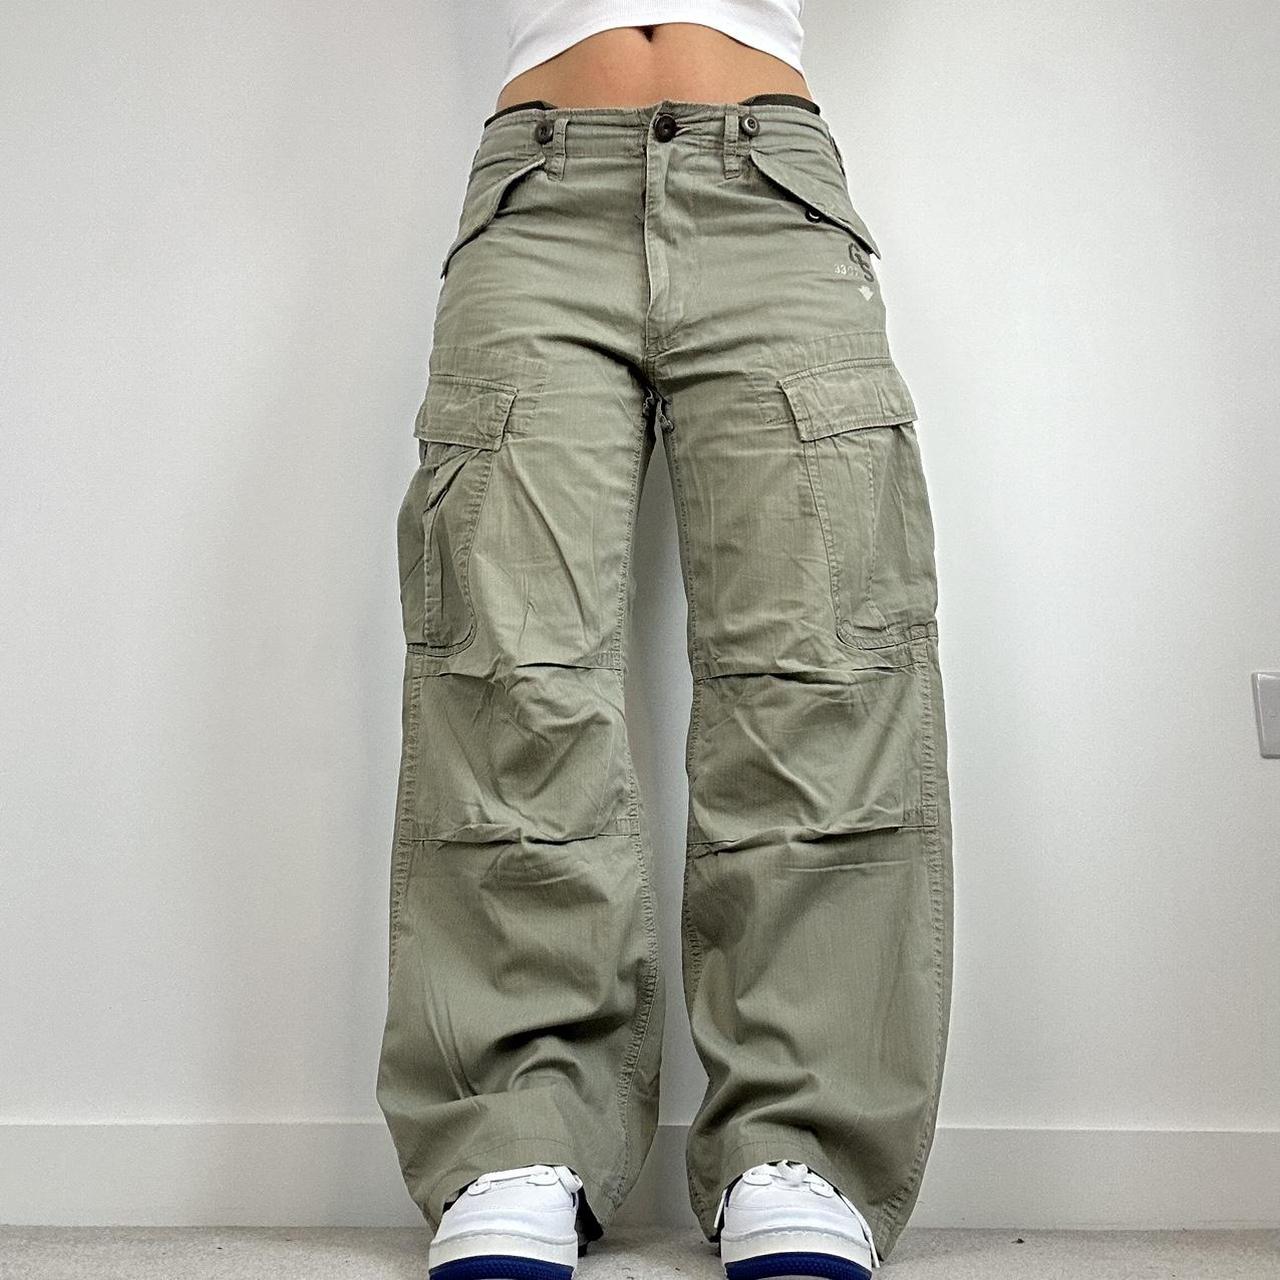 G-Star ZIP POCKET 3D - Trousers - axis/grey - Zalando.de